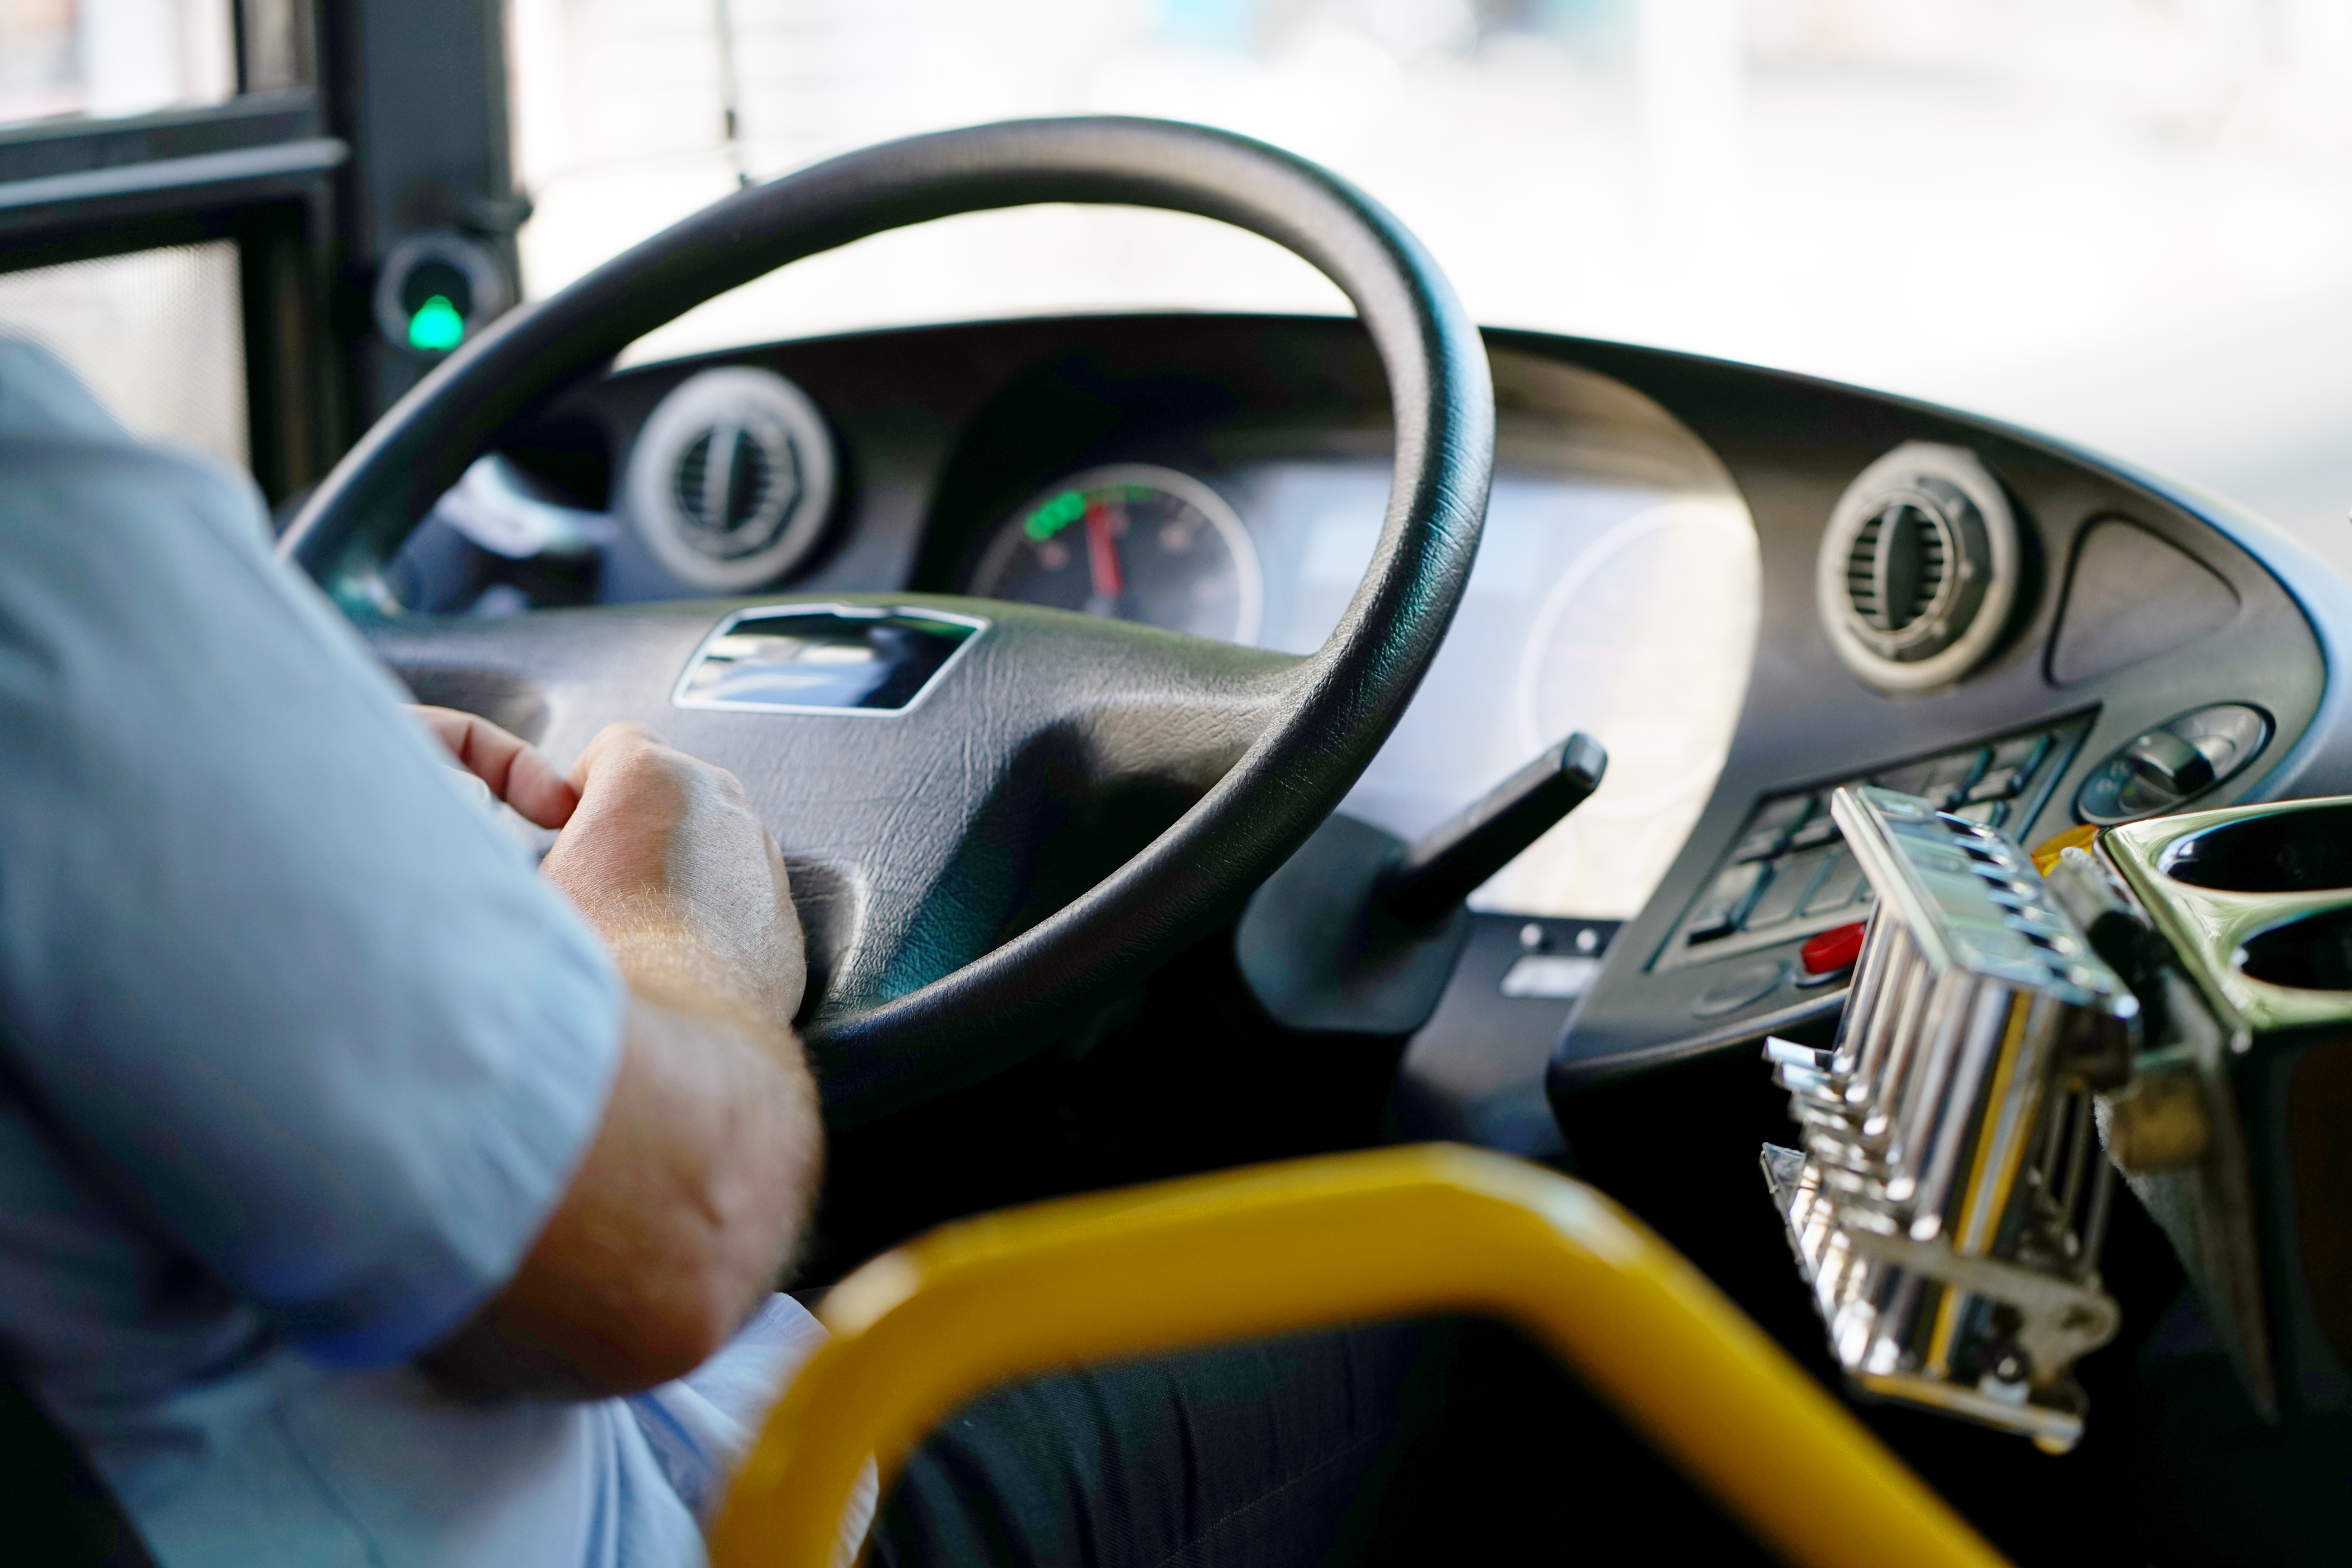 A bus driver | Source: Shutterstock